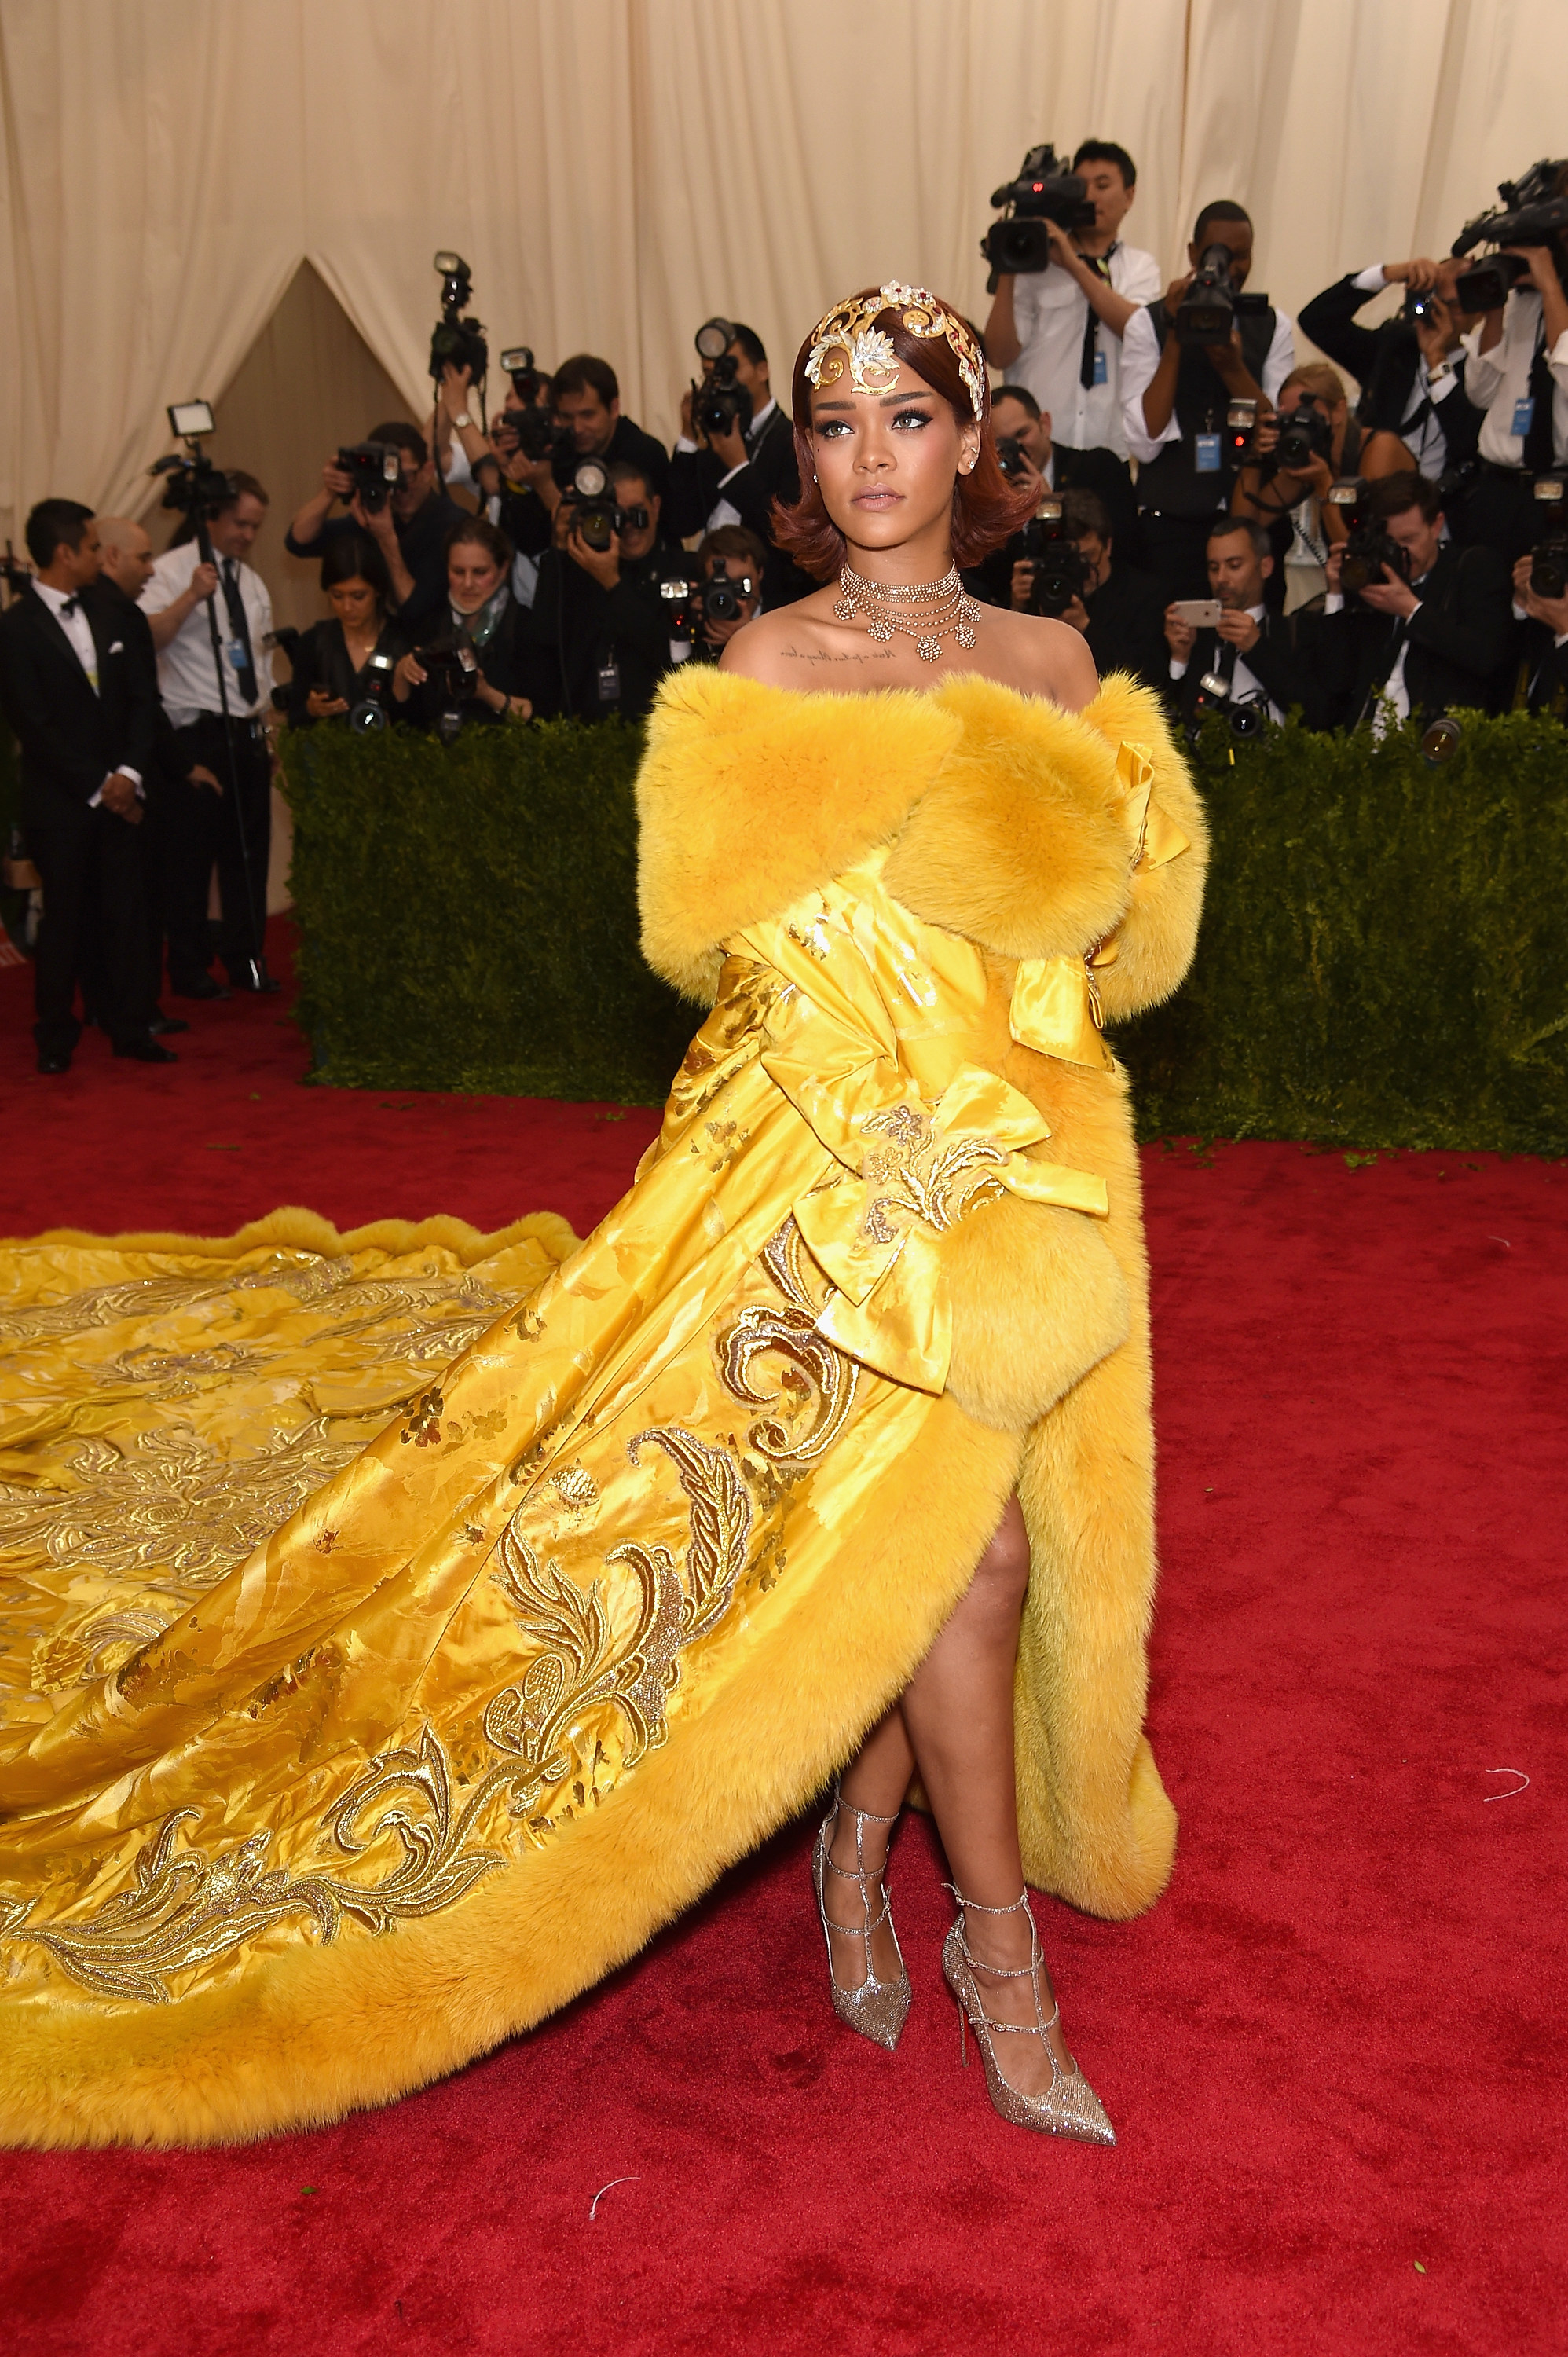 Rihanna posing at the Met Gala red carpet in 2015